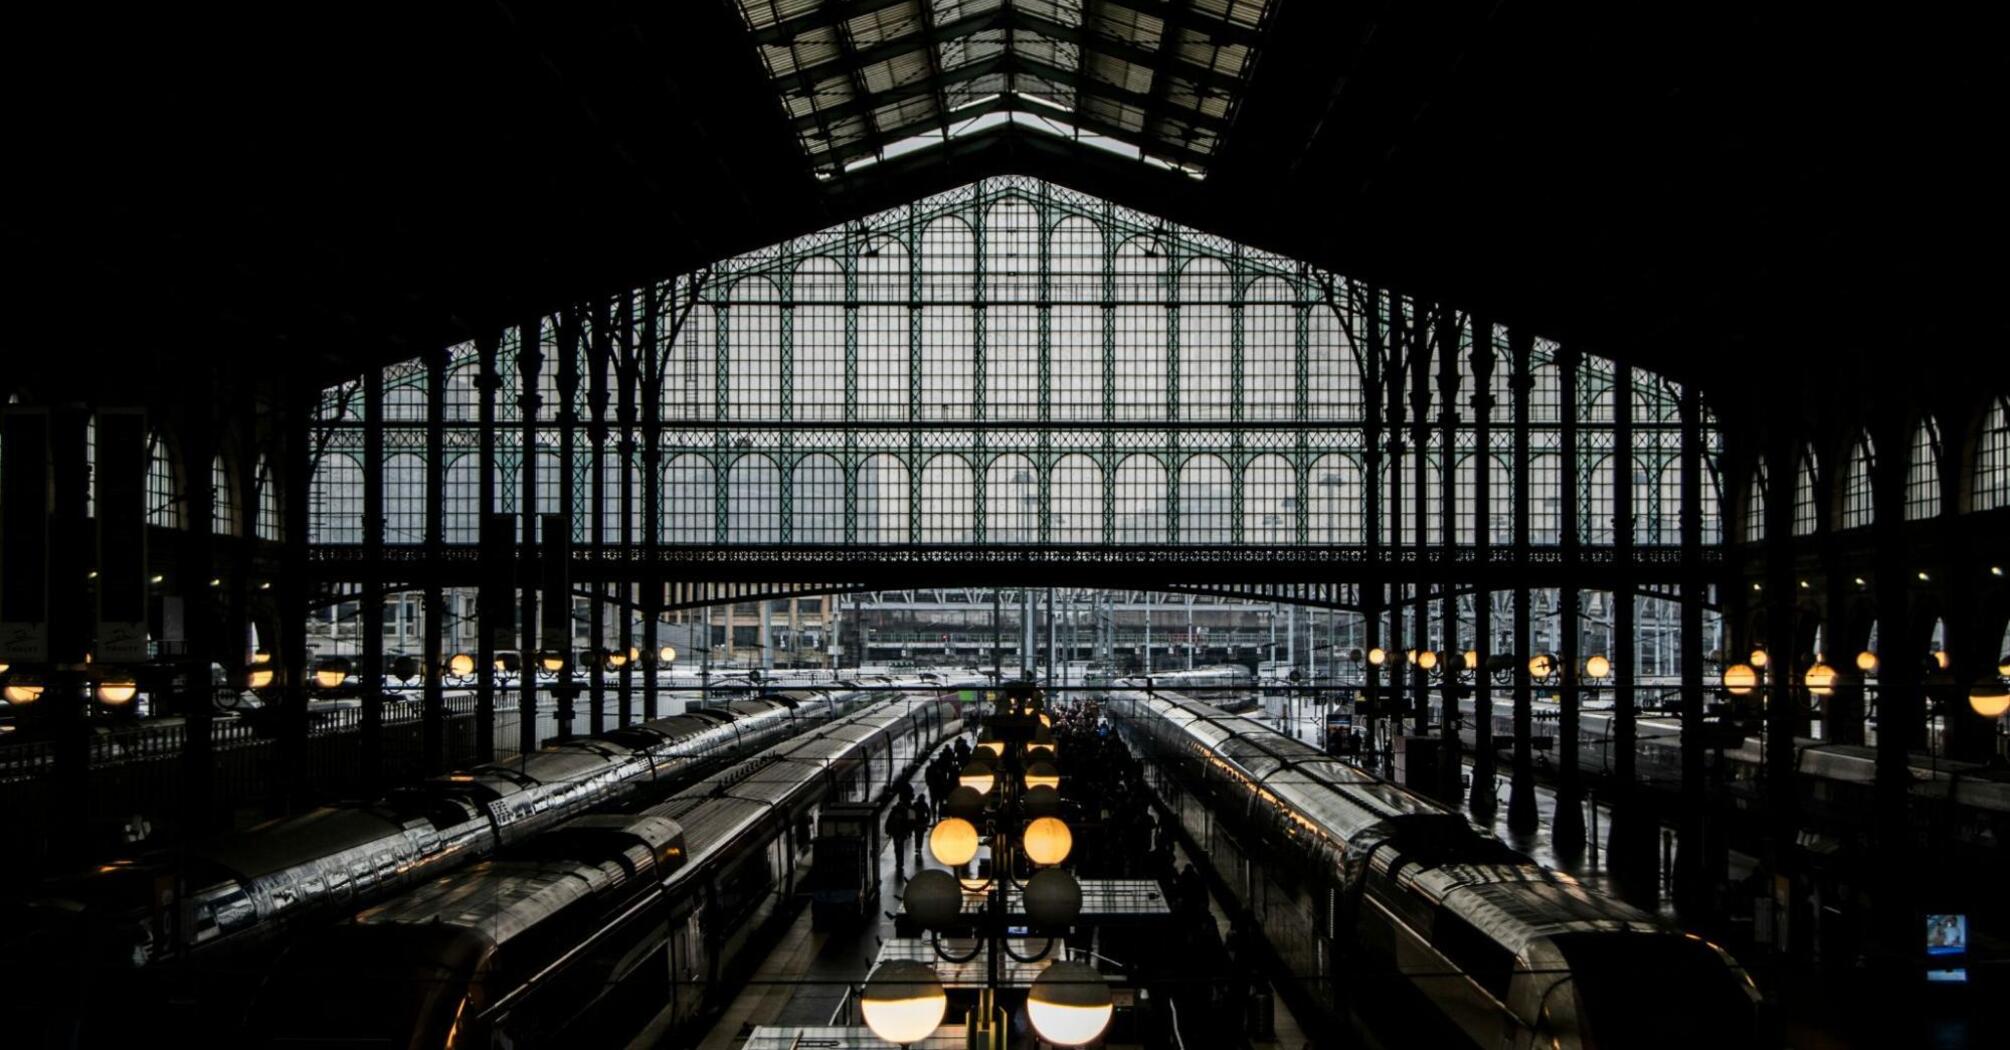 Railway Station in Paris, France